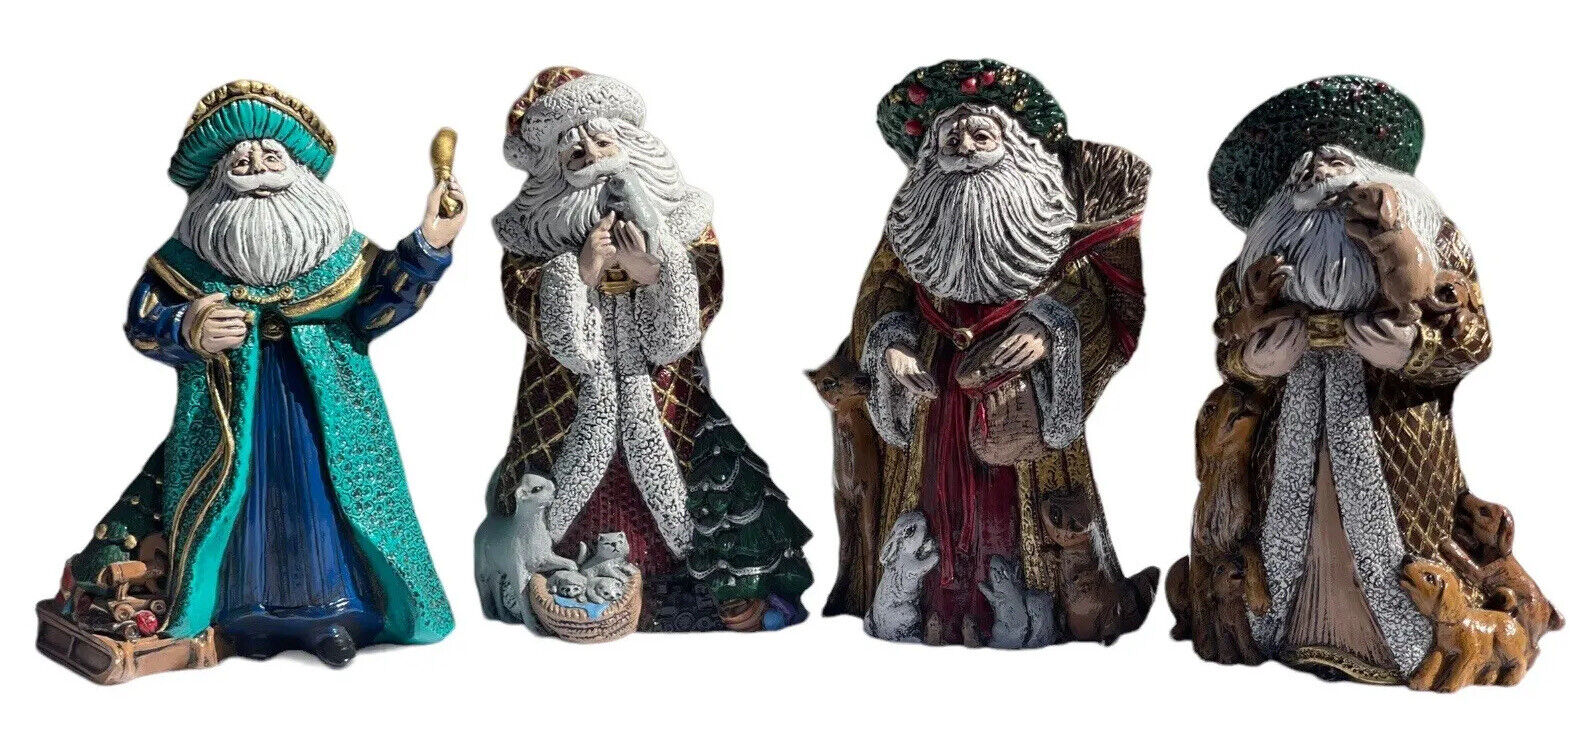 Santa Chalkware ? Figurine 10” Handmade Old World Orthodox Father Christmas Clau